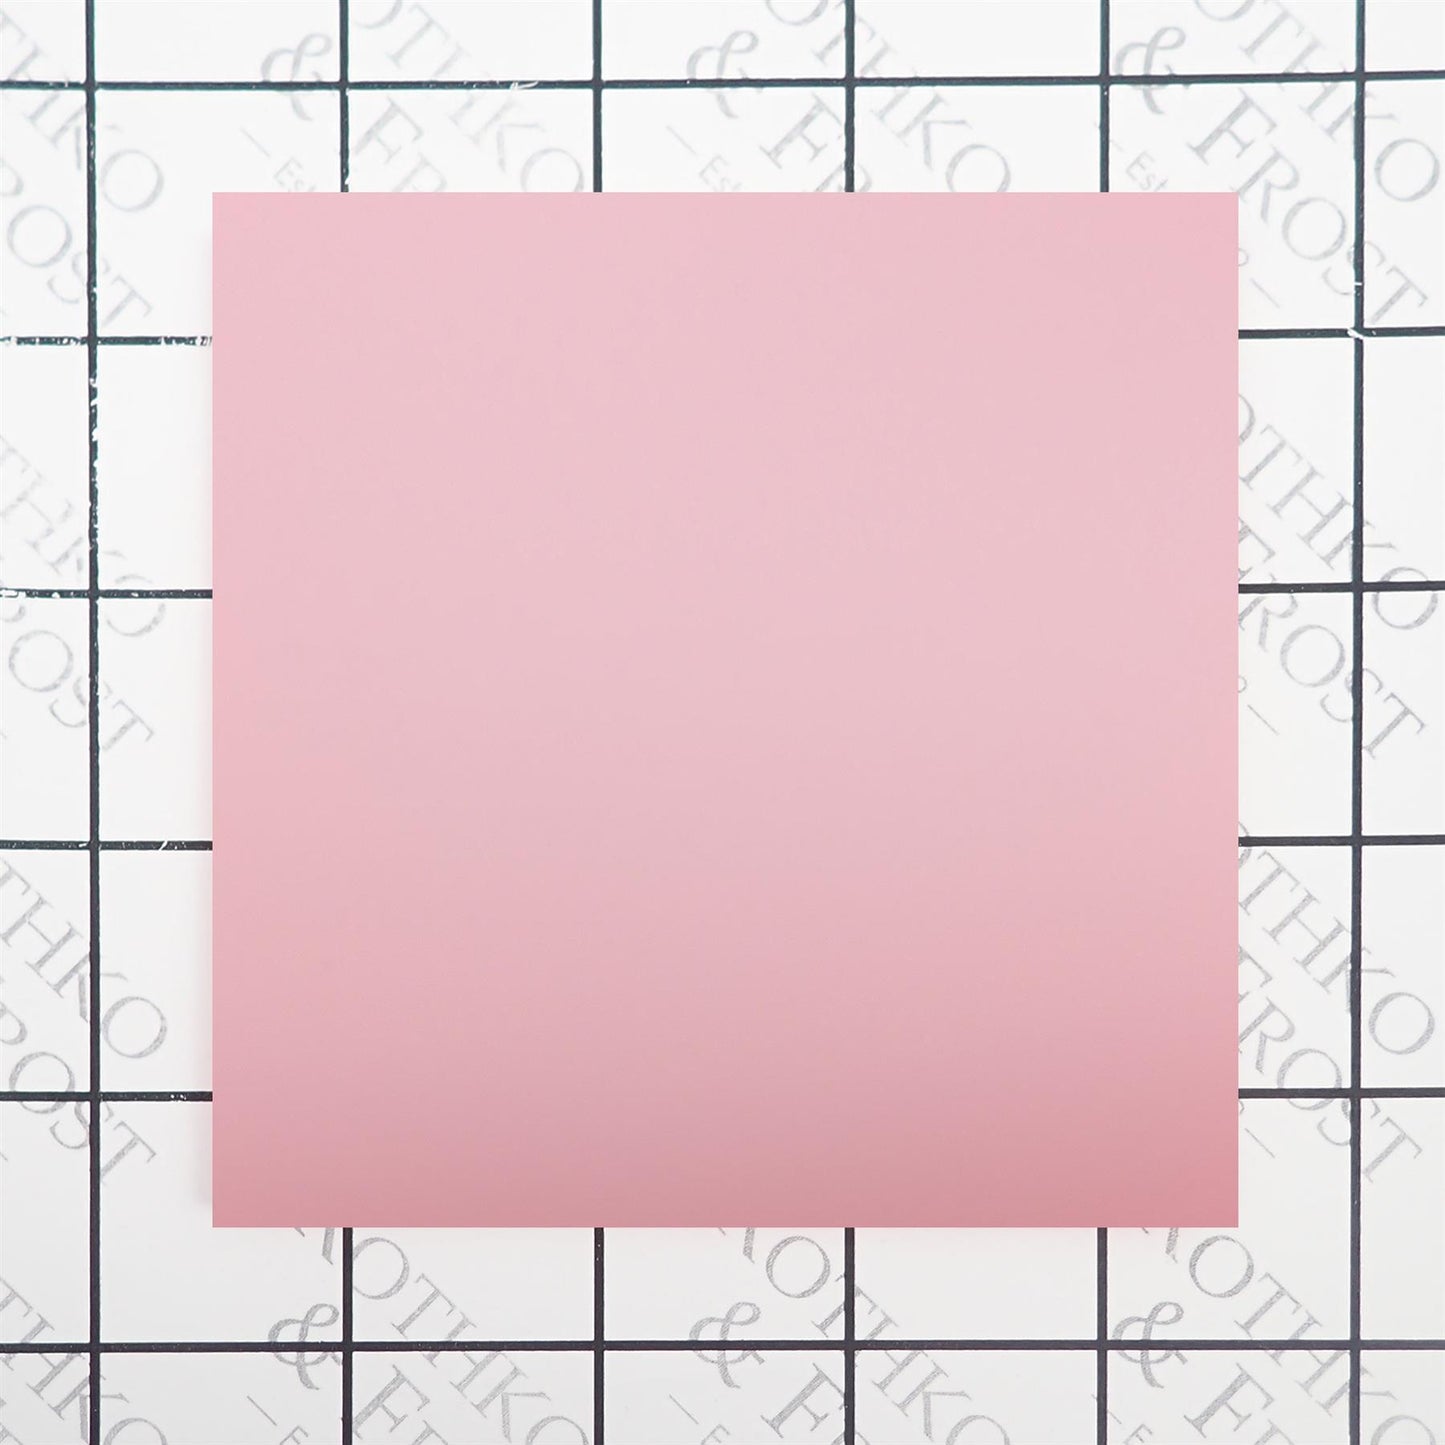 Incudo Pink Satin Metallic Acrylic Sheet - 400x300x3mm